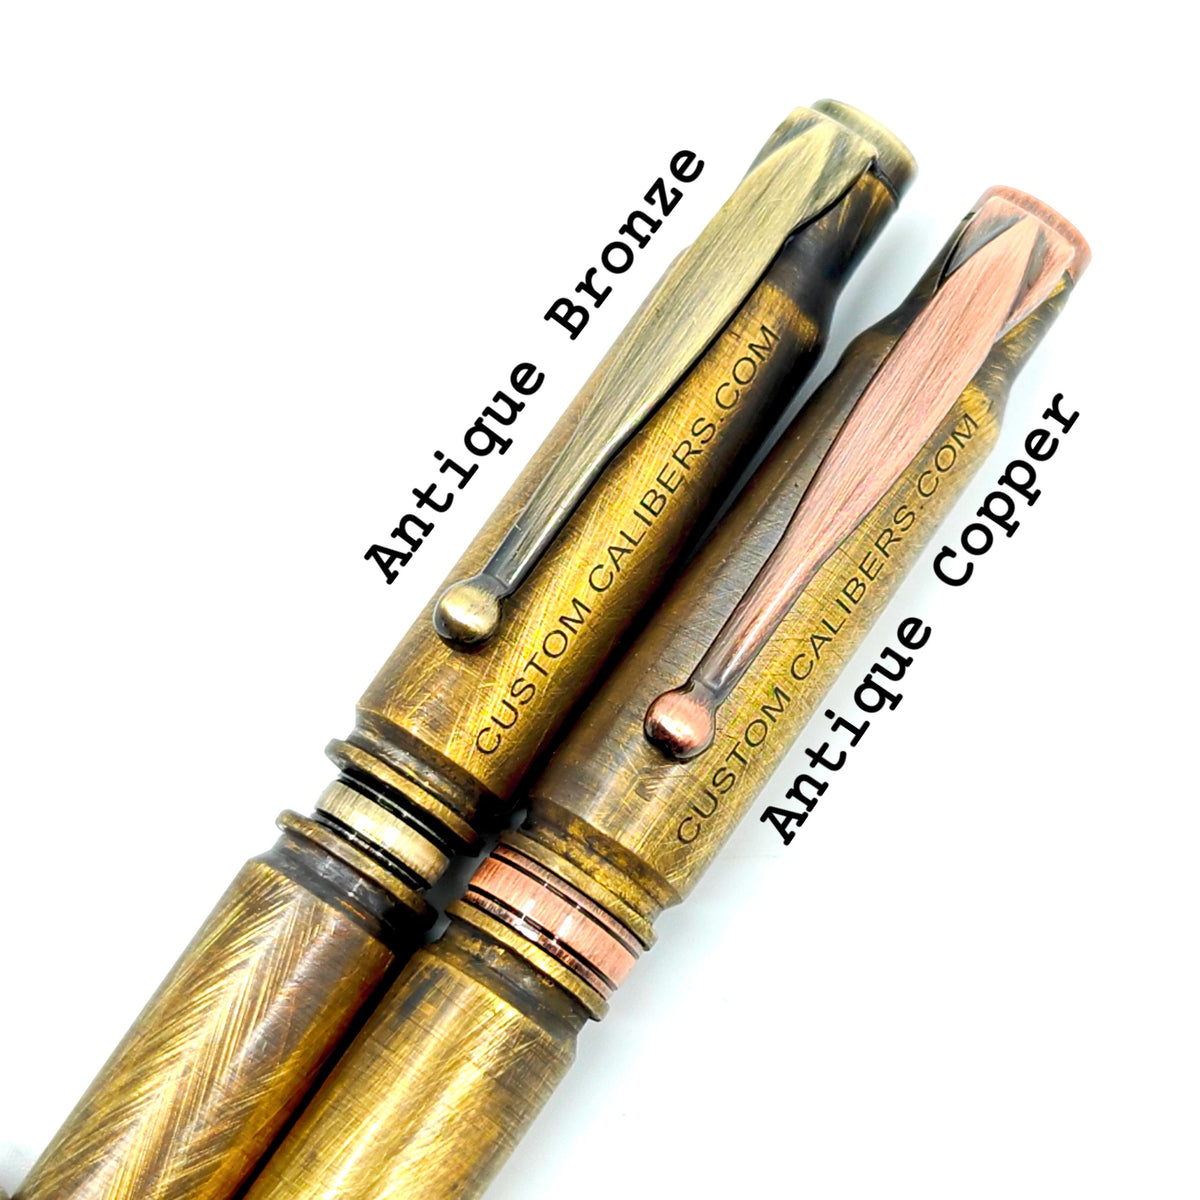 Battle-scarred Classic 308 Bullet Pen